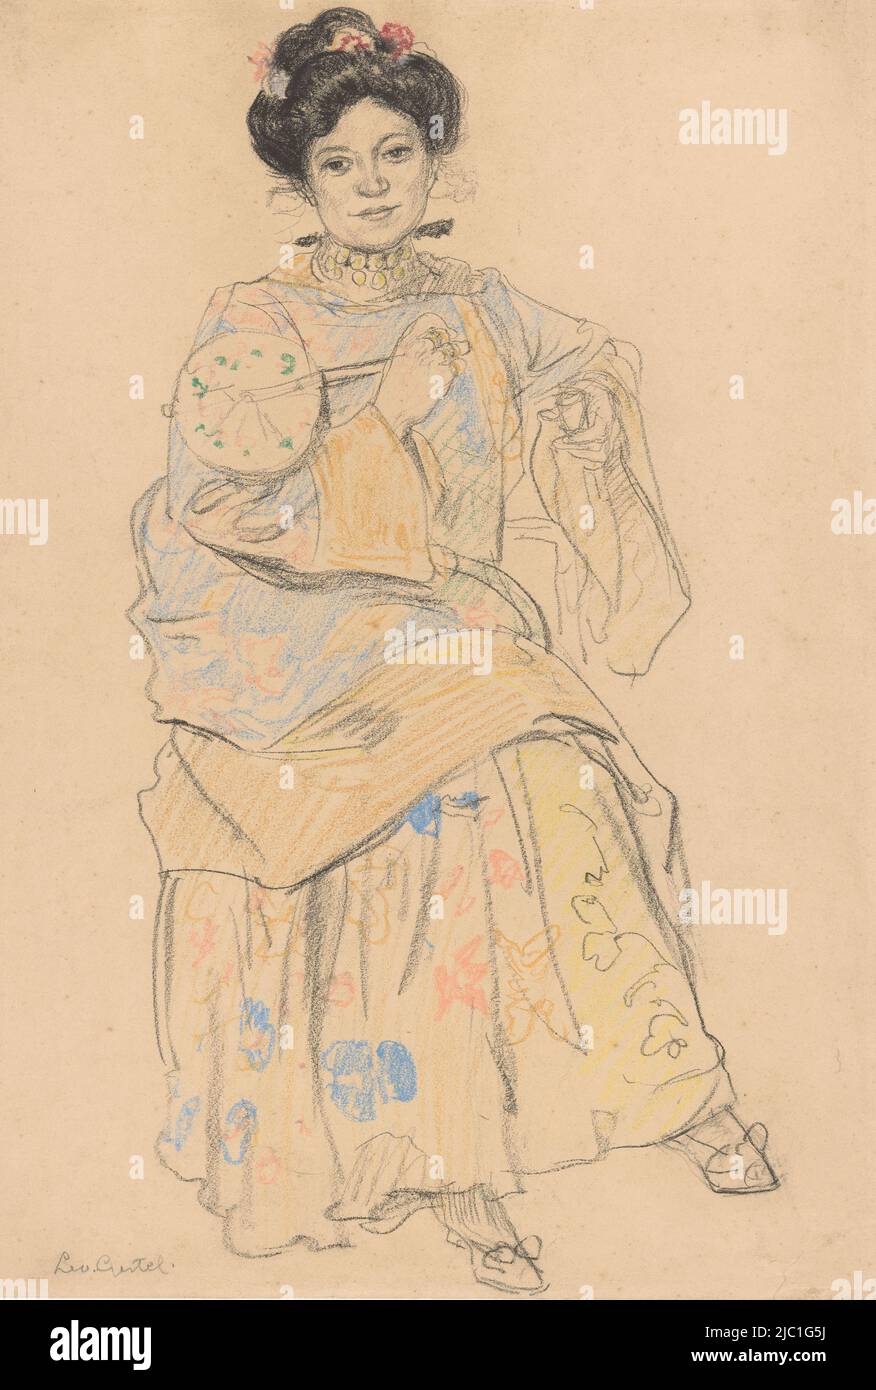 Donna seduta a la Japonaise, disegnatrice: Leo Gestel, 1891 - 1941, carta, h 453 mm x l 311 mm Foto Stock